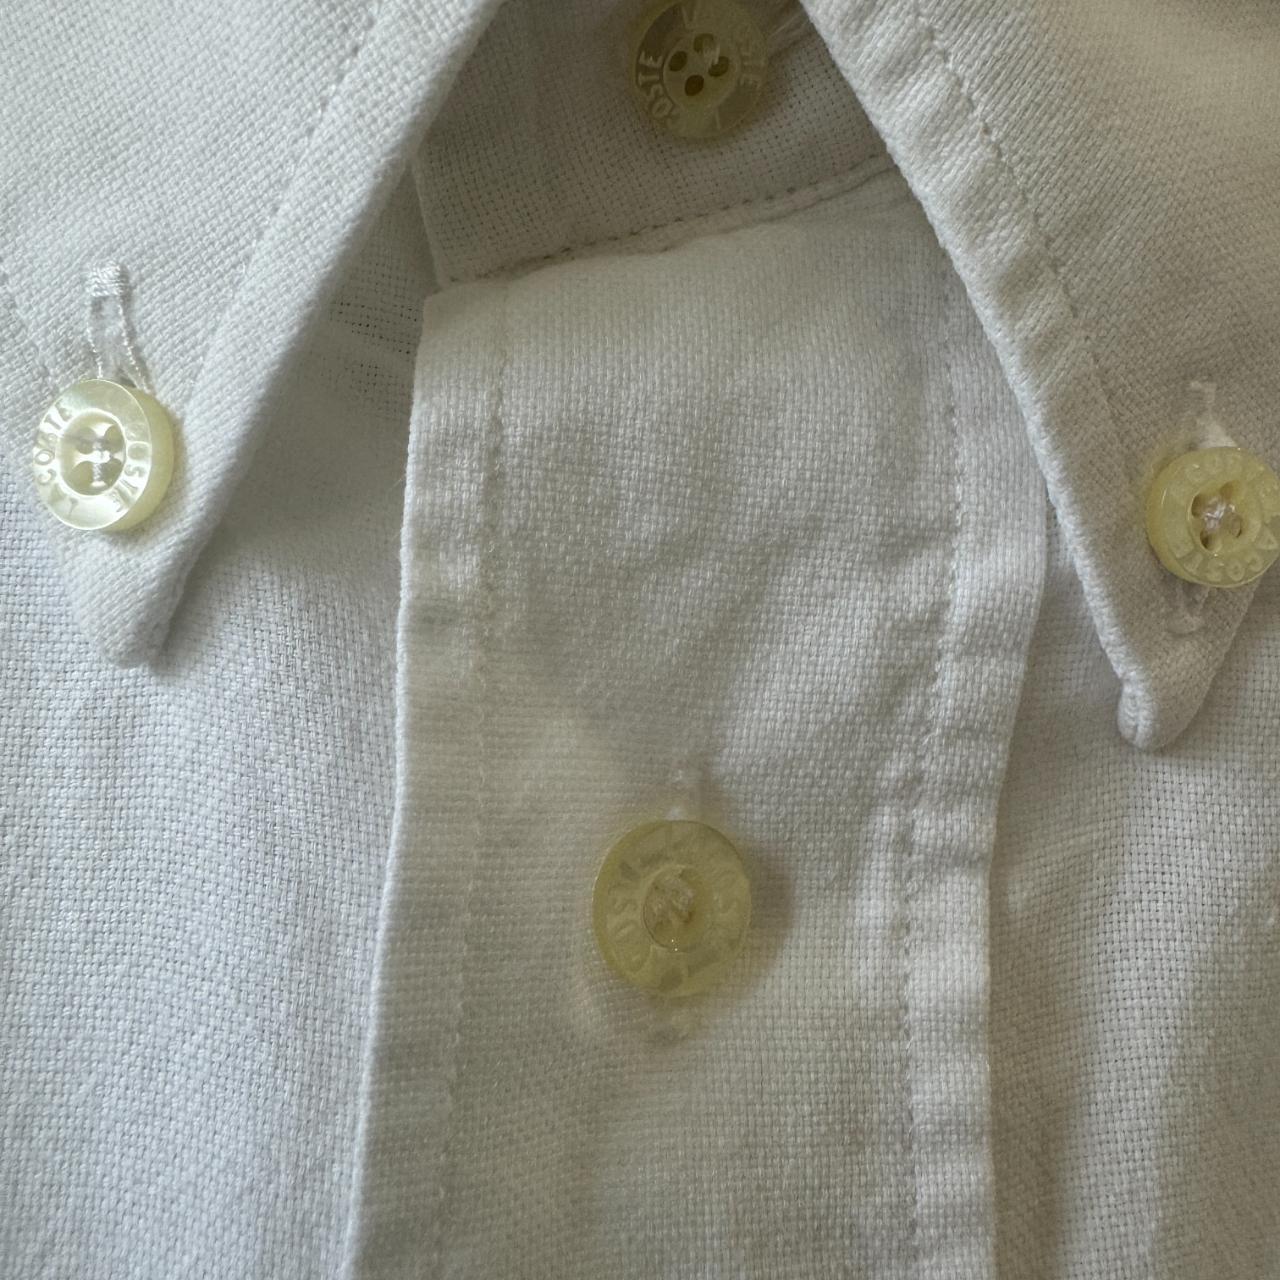 Lacoste Short Sleeve Shirt White Button Down Size... - Depop